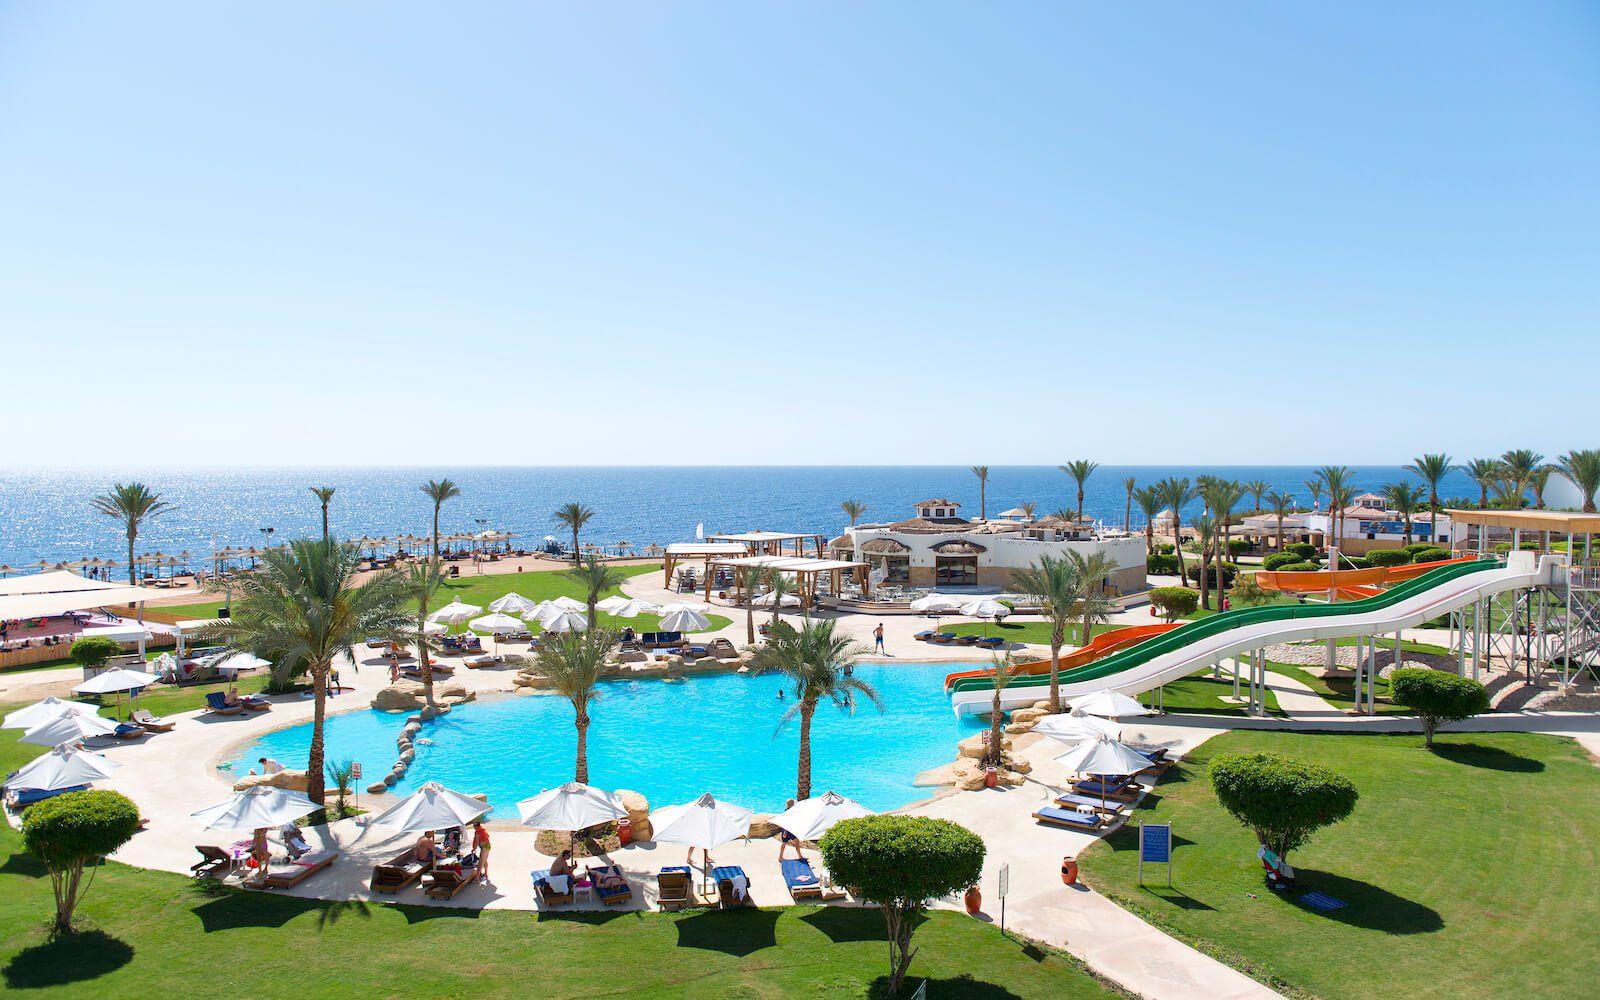 OTIUM Family Amphoras Beach Resort - Sharm El Sheikh - Egypte